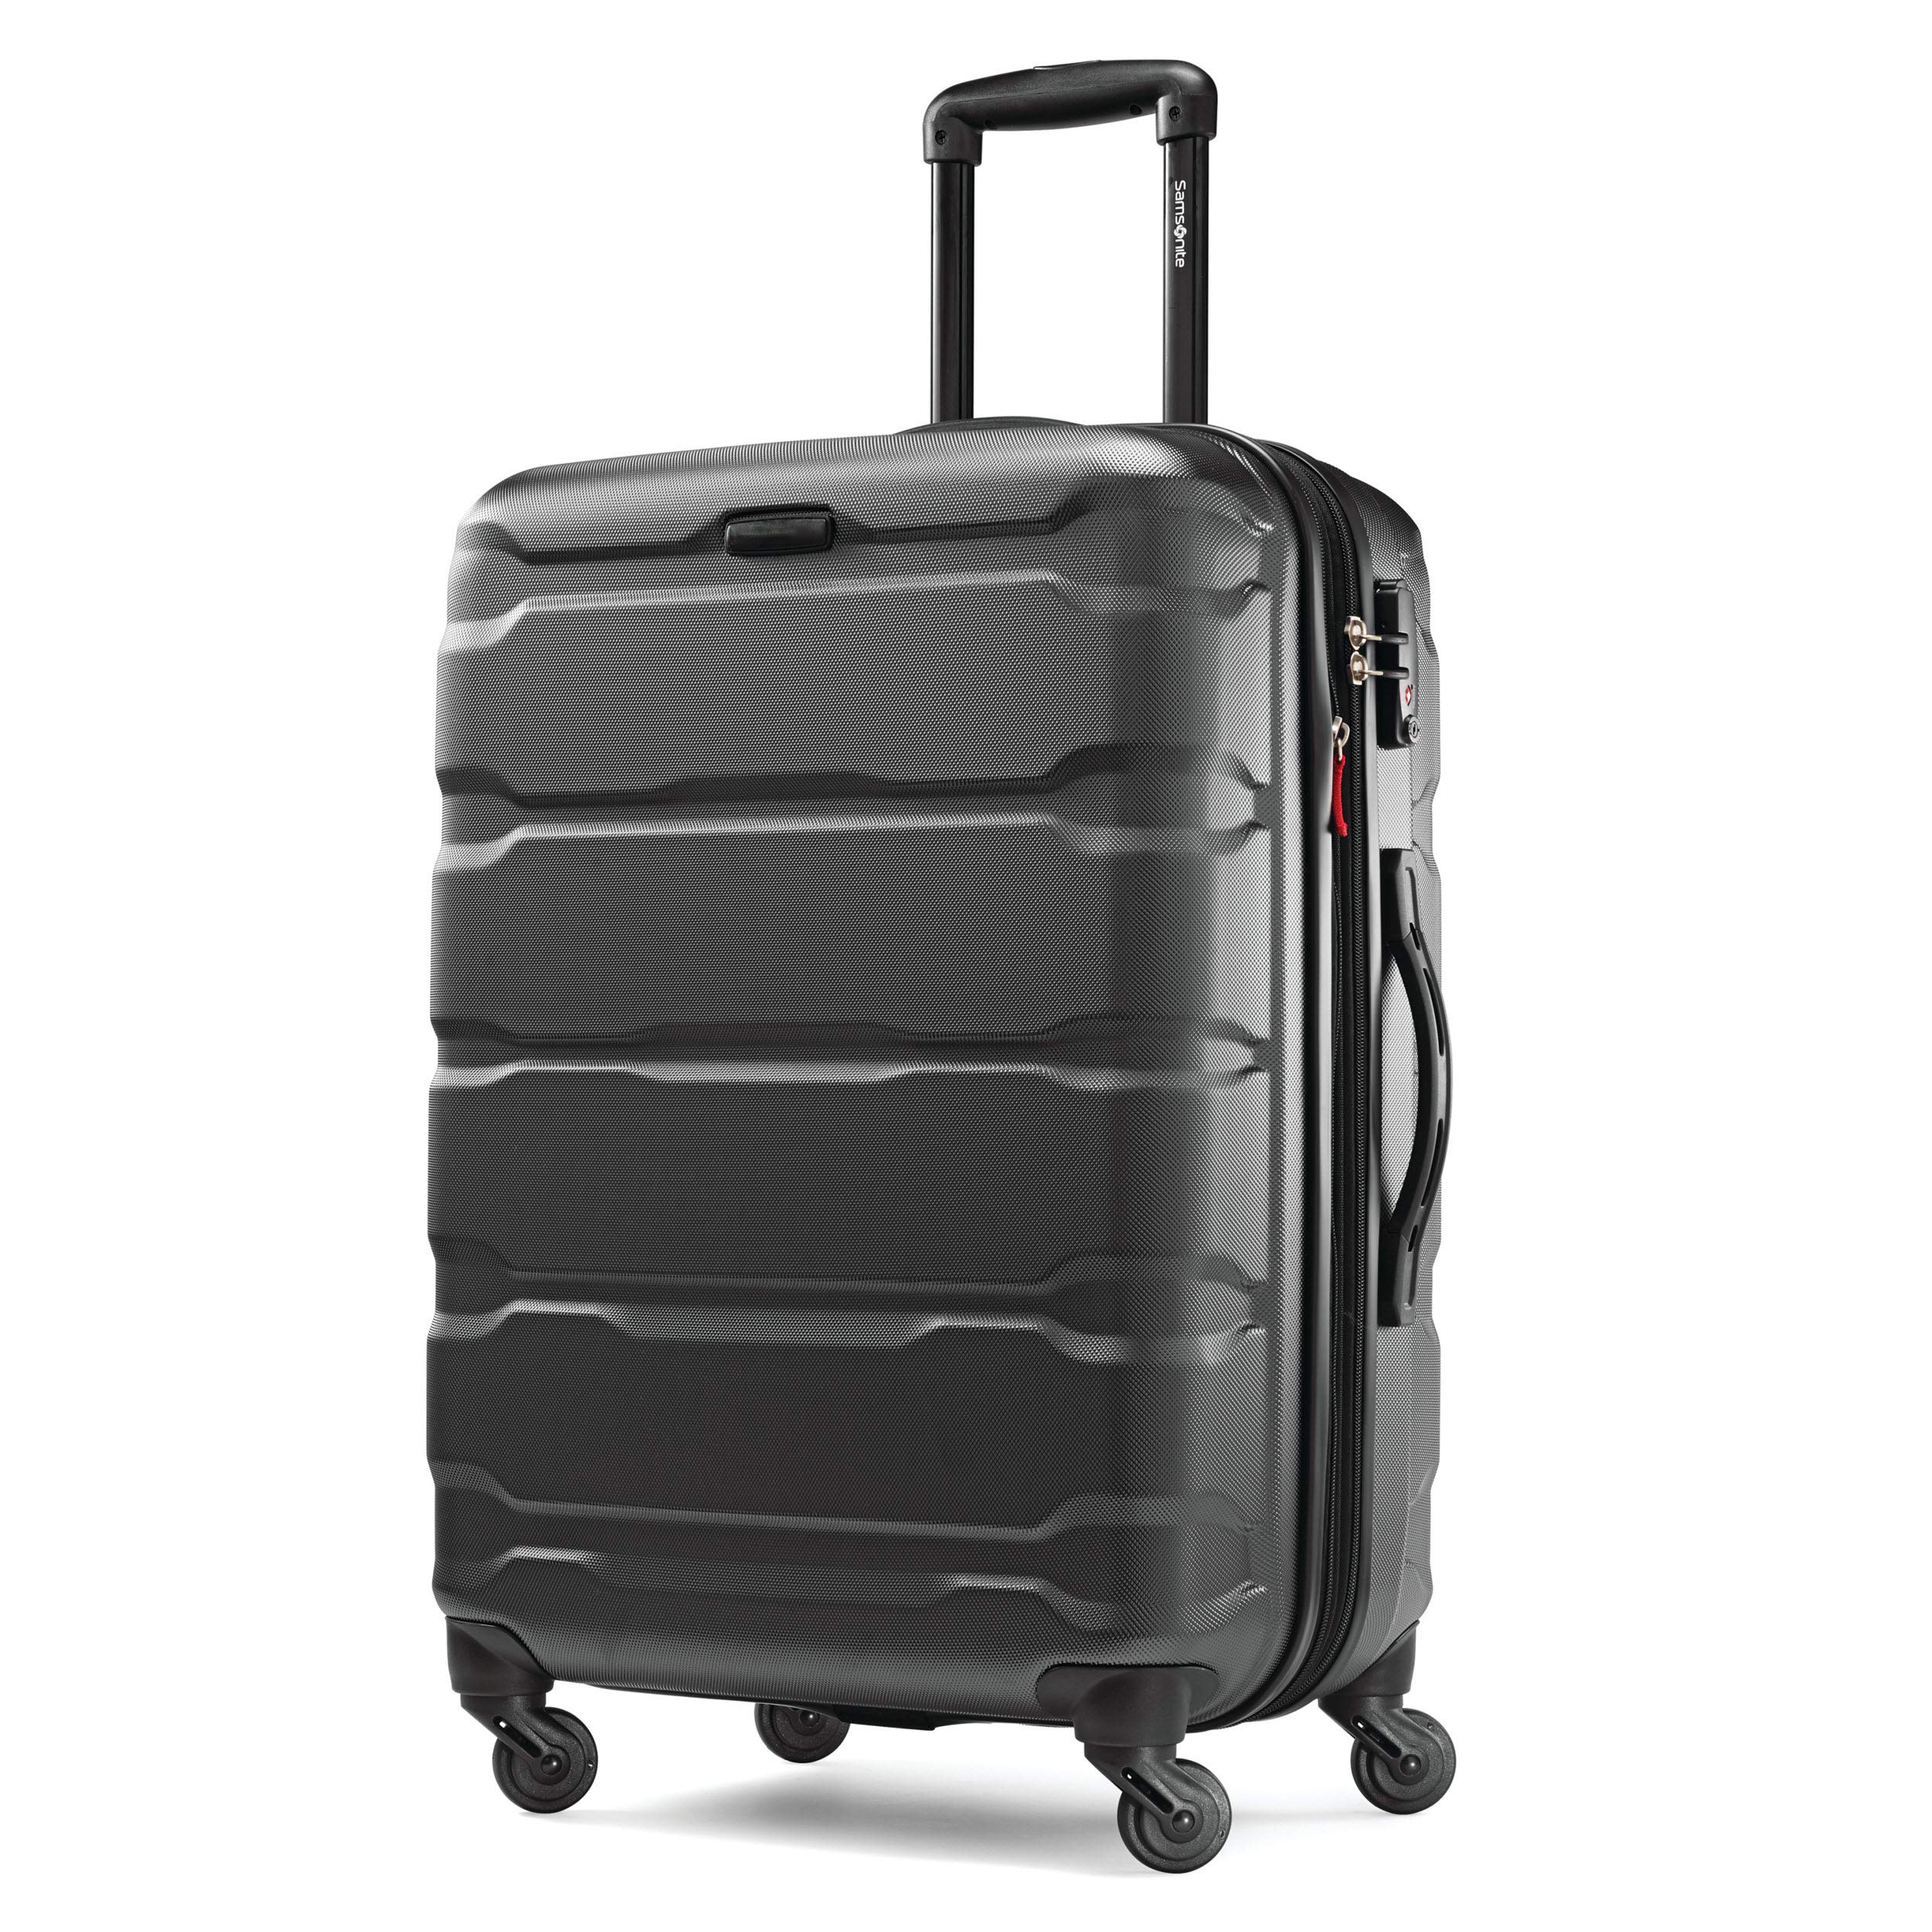 हार्डसाइड एक्सटेंडेबल सूटकेस काला, बहुरंगी पहिये वाला डफ़ल बैग